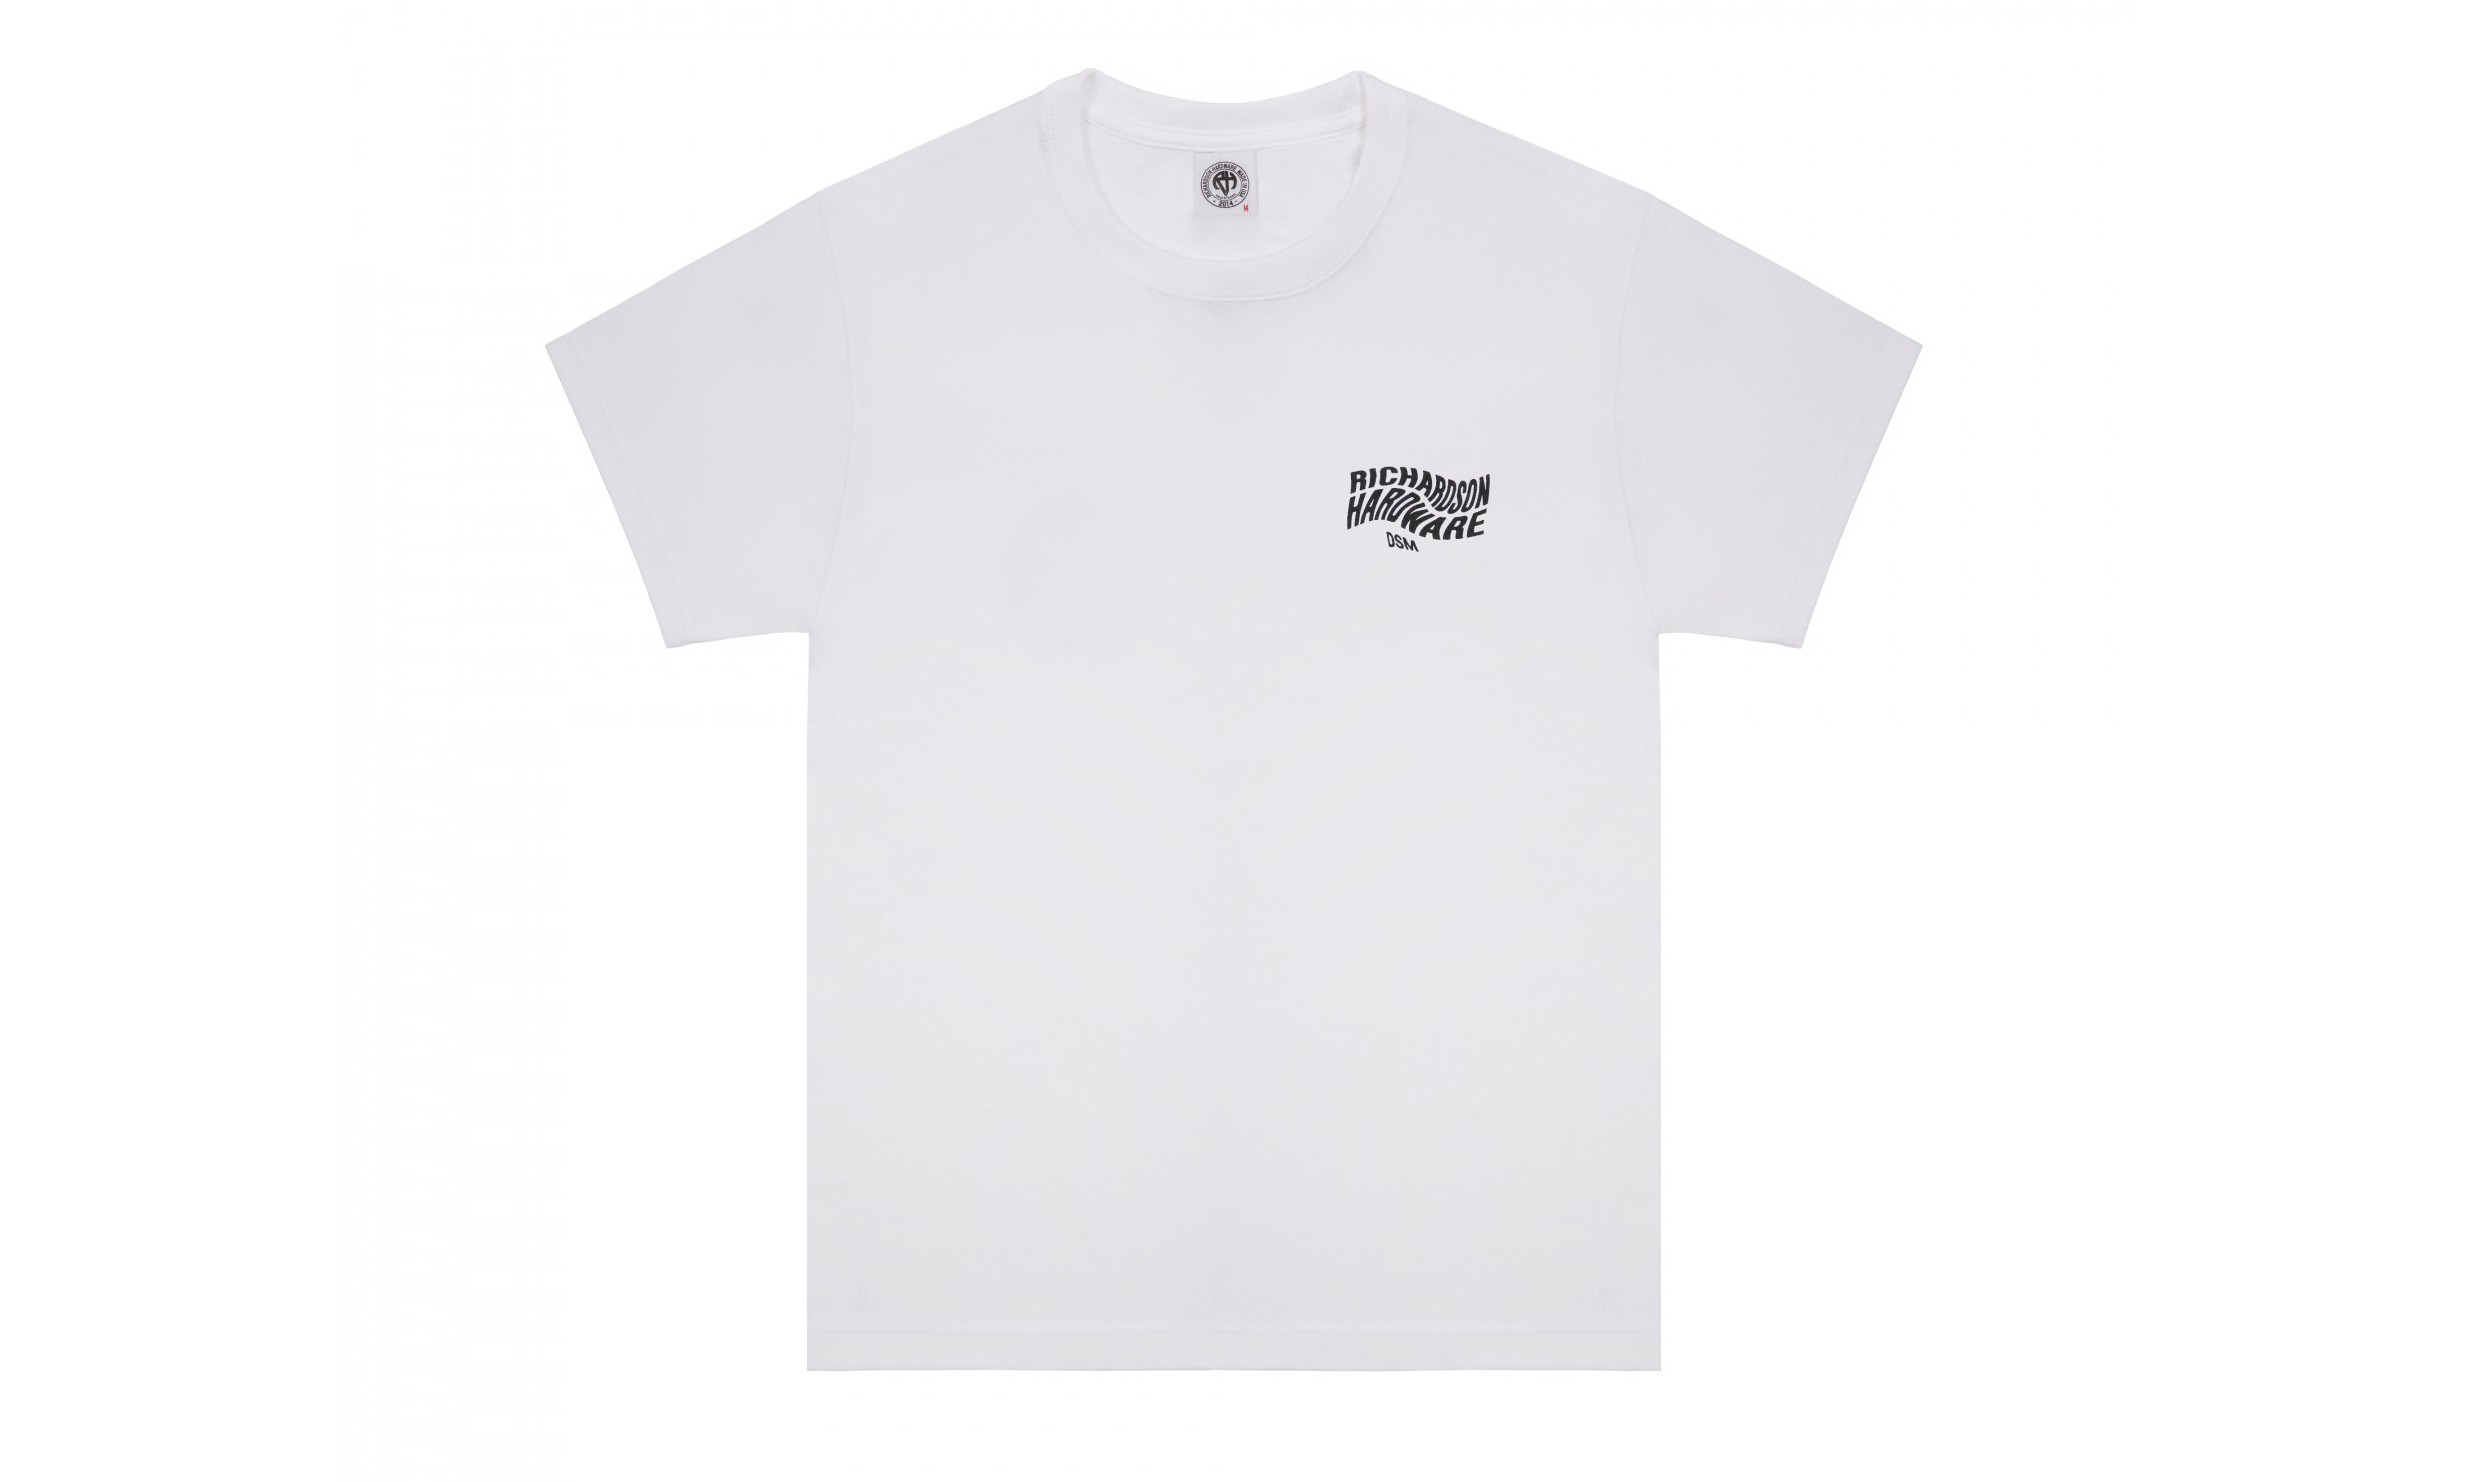 Dover Street Market London x 《Richardson》联名 T-Shirt 系列现已发售